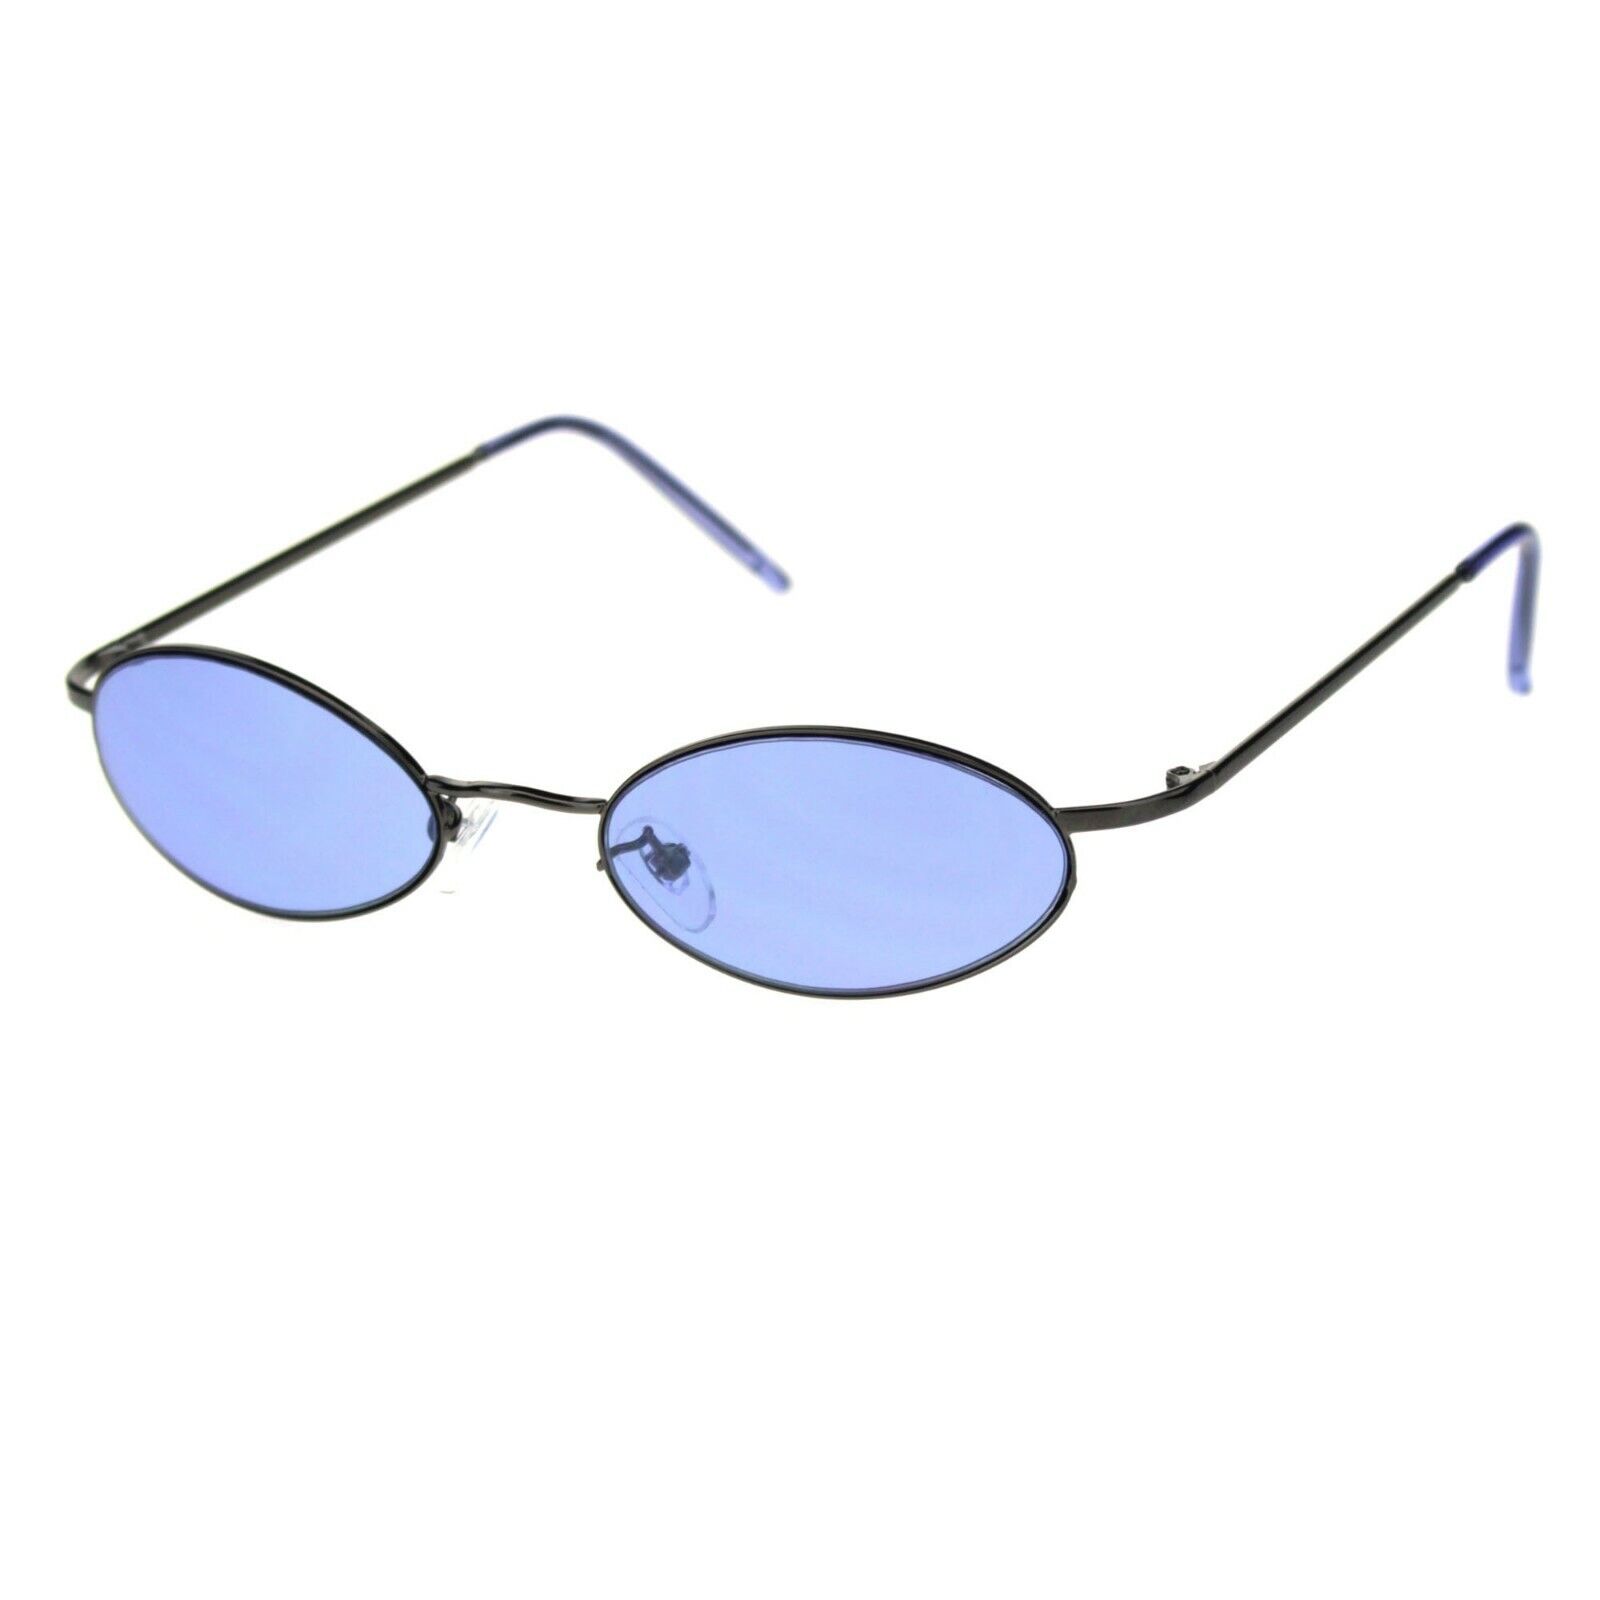 Unisex Small Sunglasses Oval Curved Gunmetal Frame Color Lens UV 400